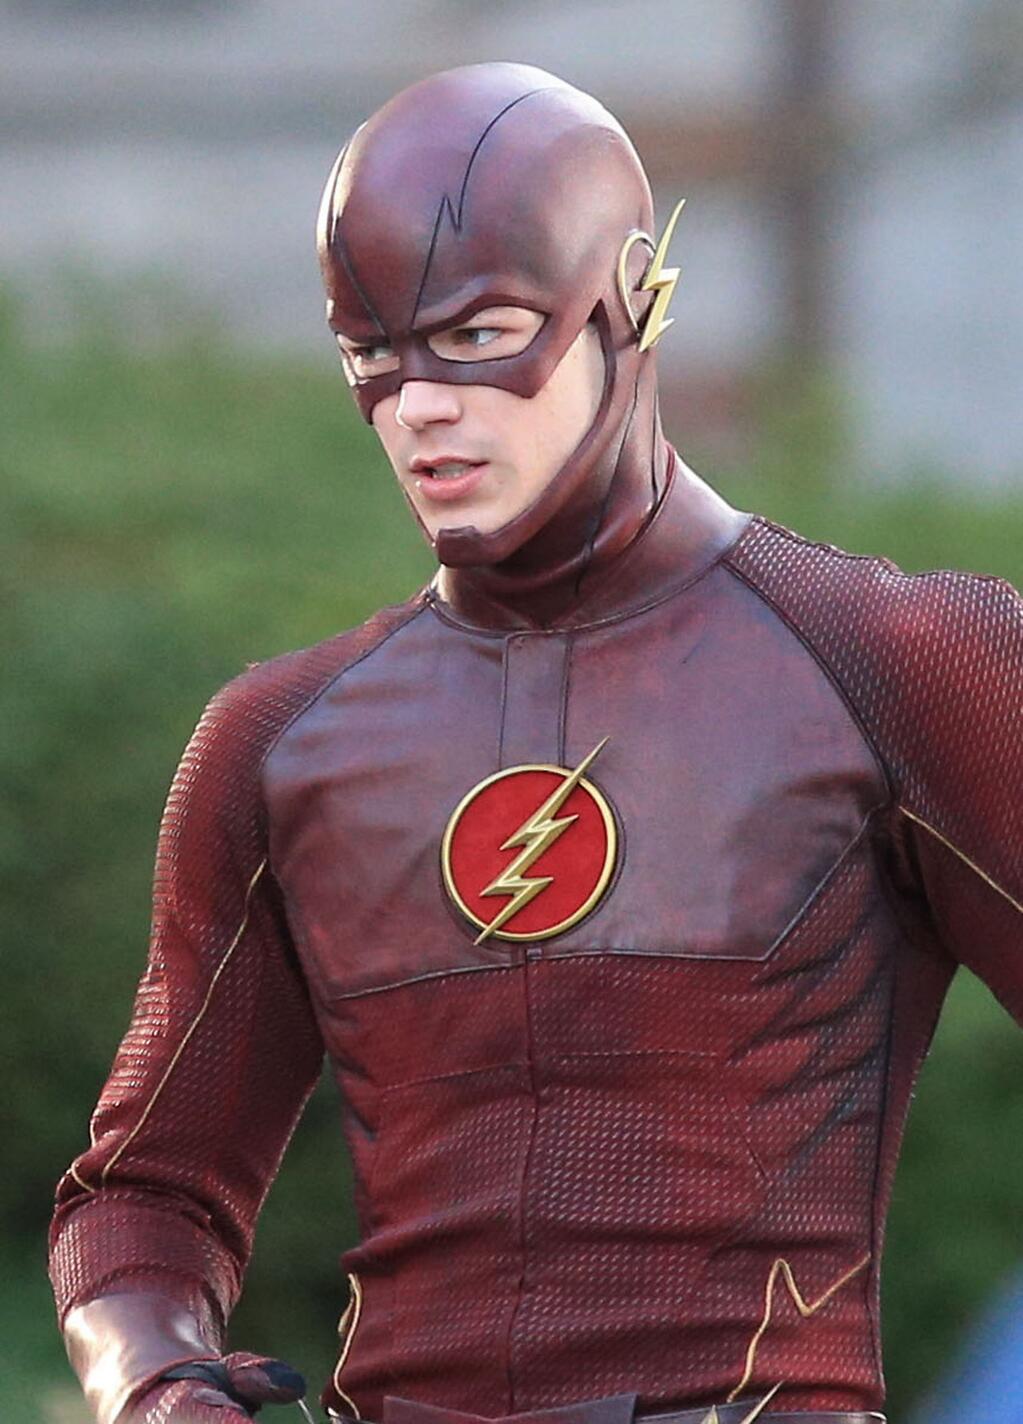 The-Flash-CW-image-the-flash-cw-36781384-1023-1424.jpg